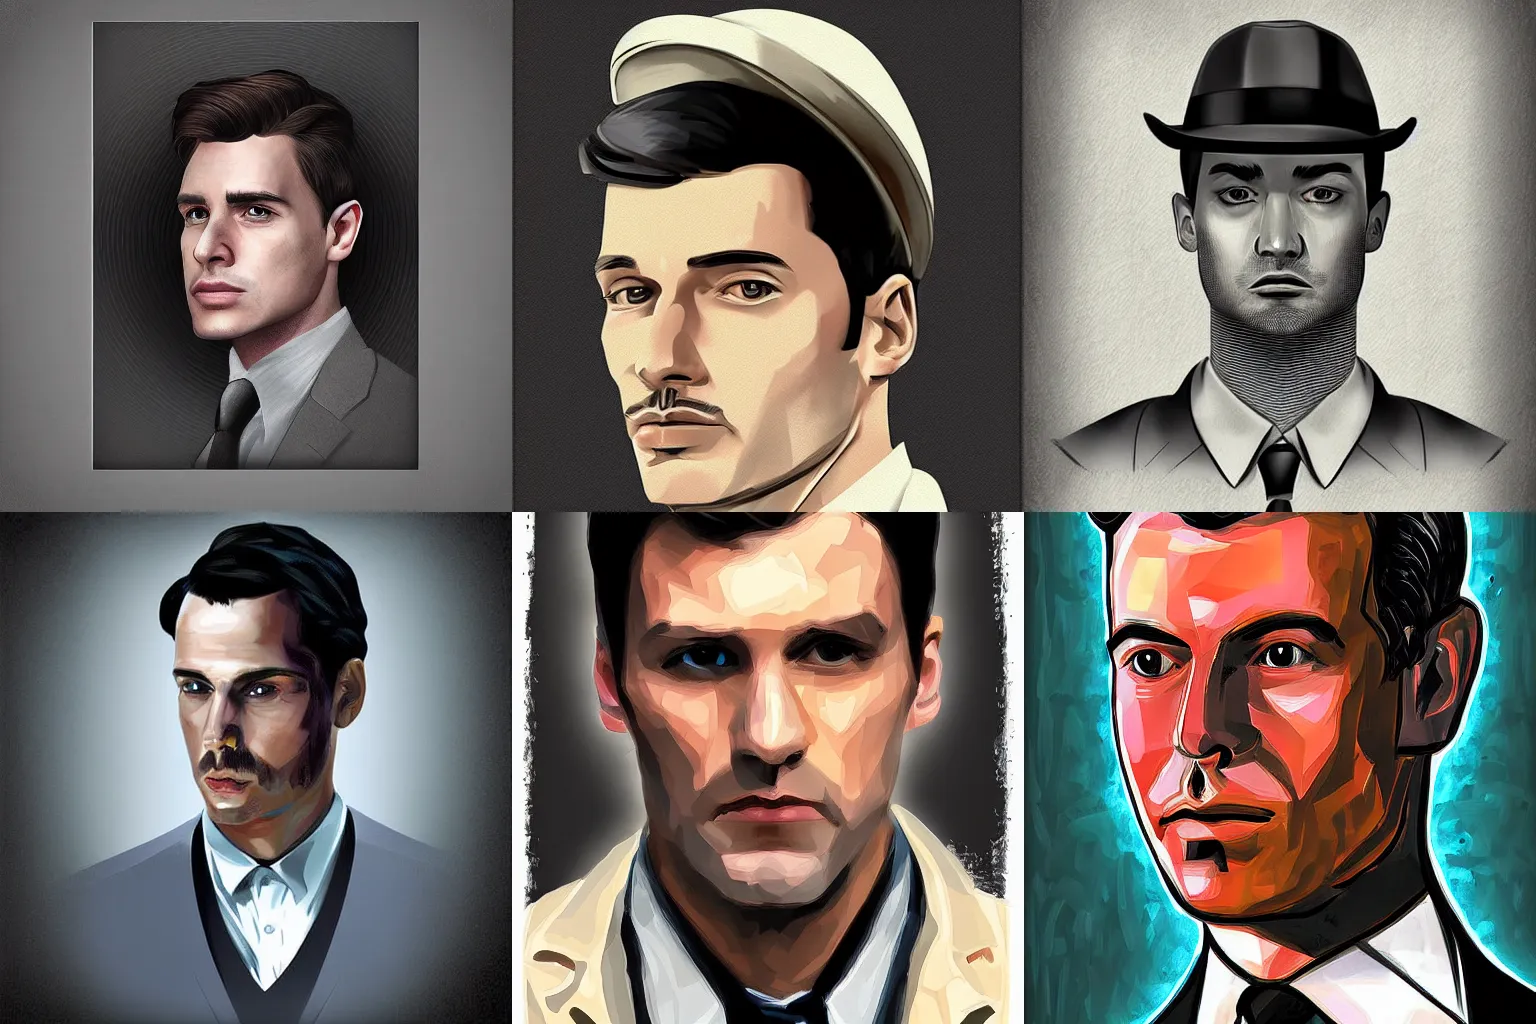 Prompt: Handsome detective, portrait, digital art